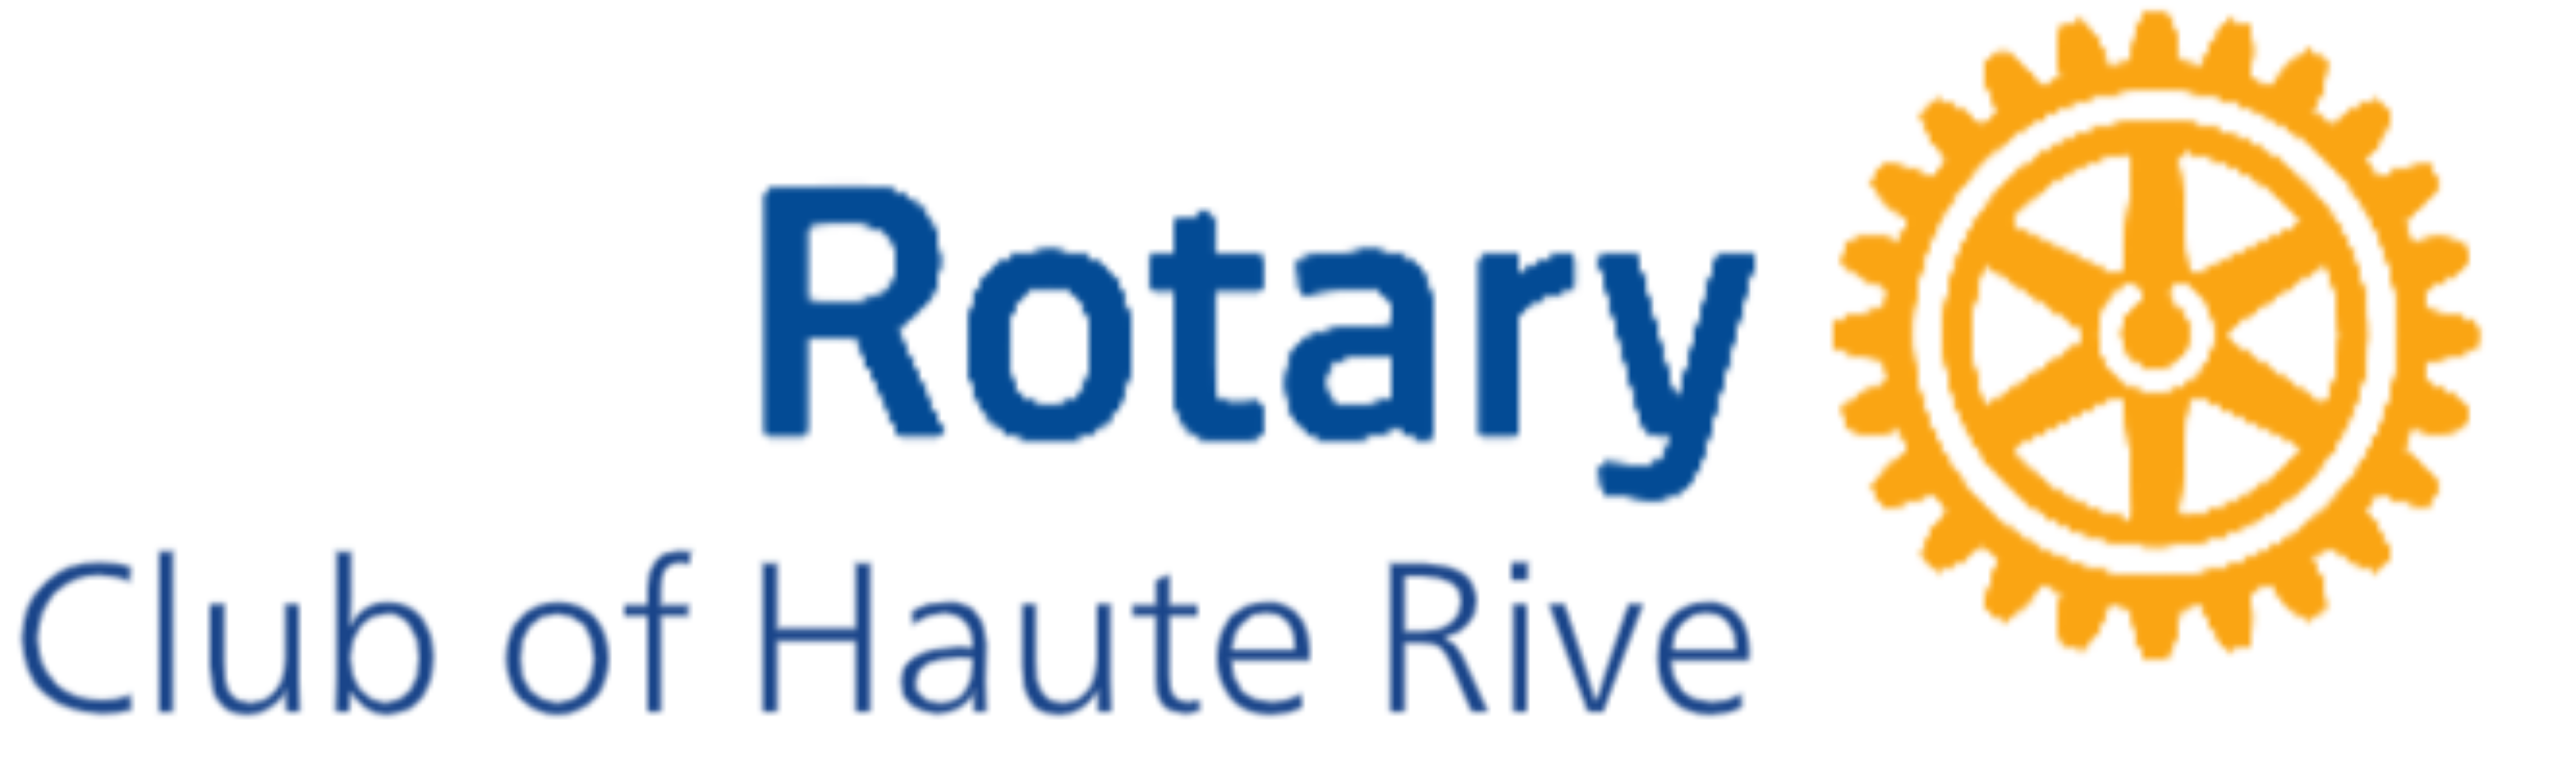 Rotary Club of Haute Rive